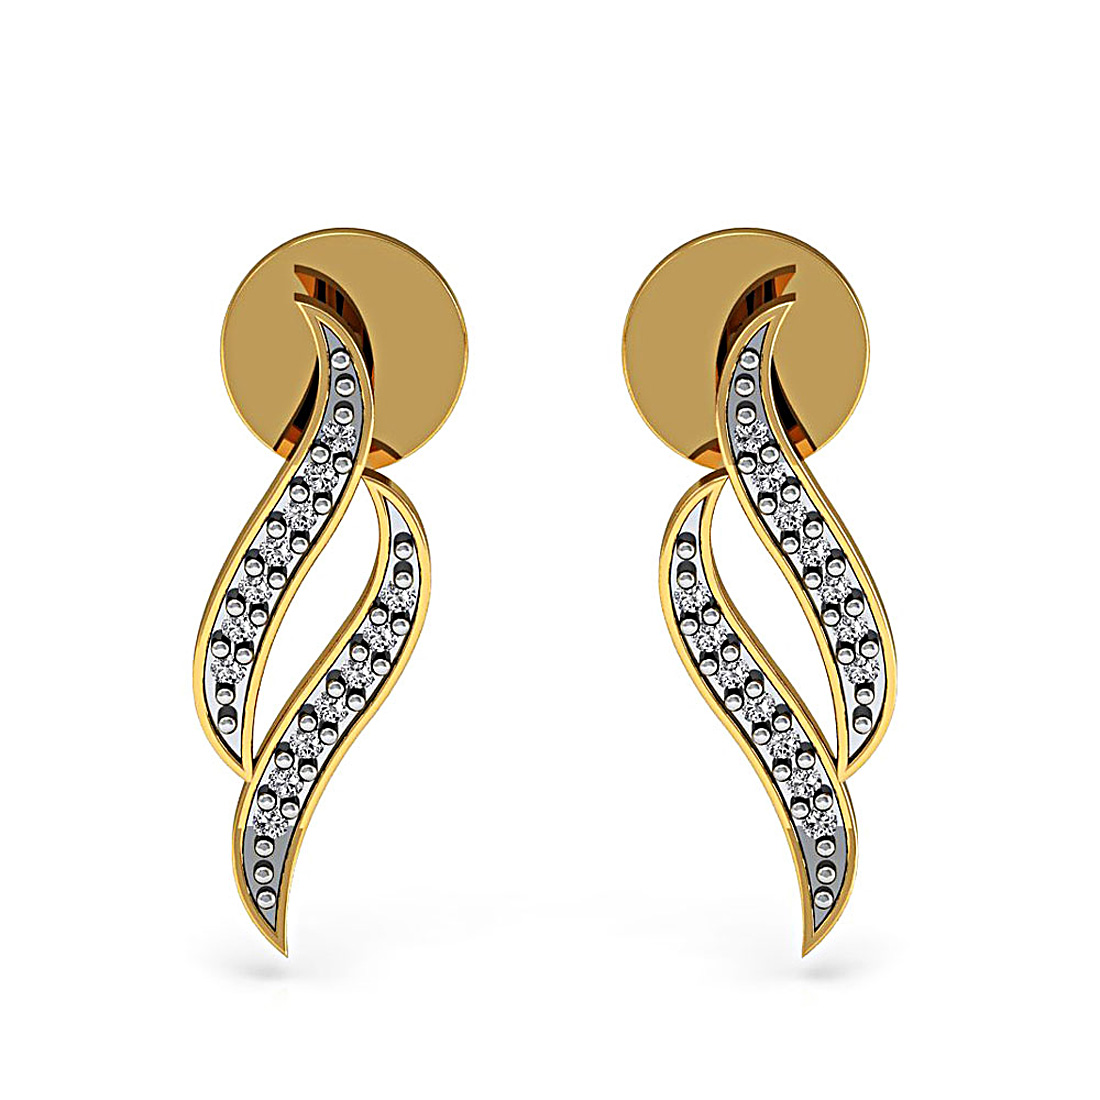 18k solid gold leaf shape stud earrings with genuine diamond